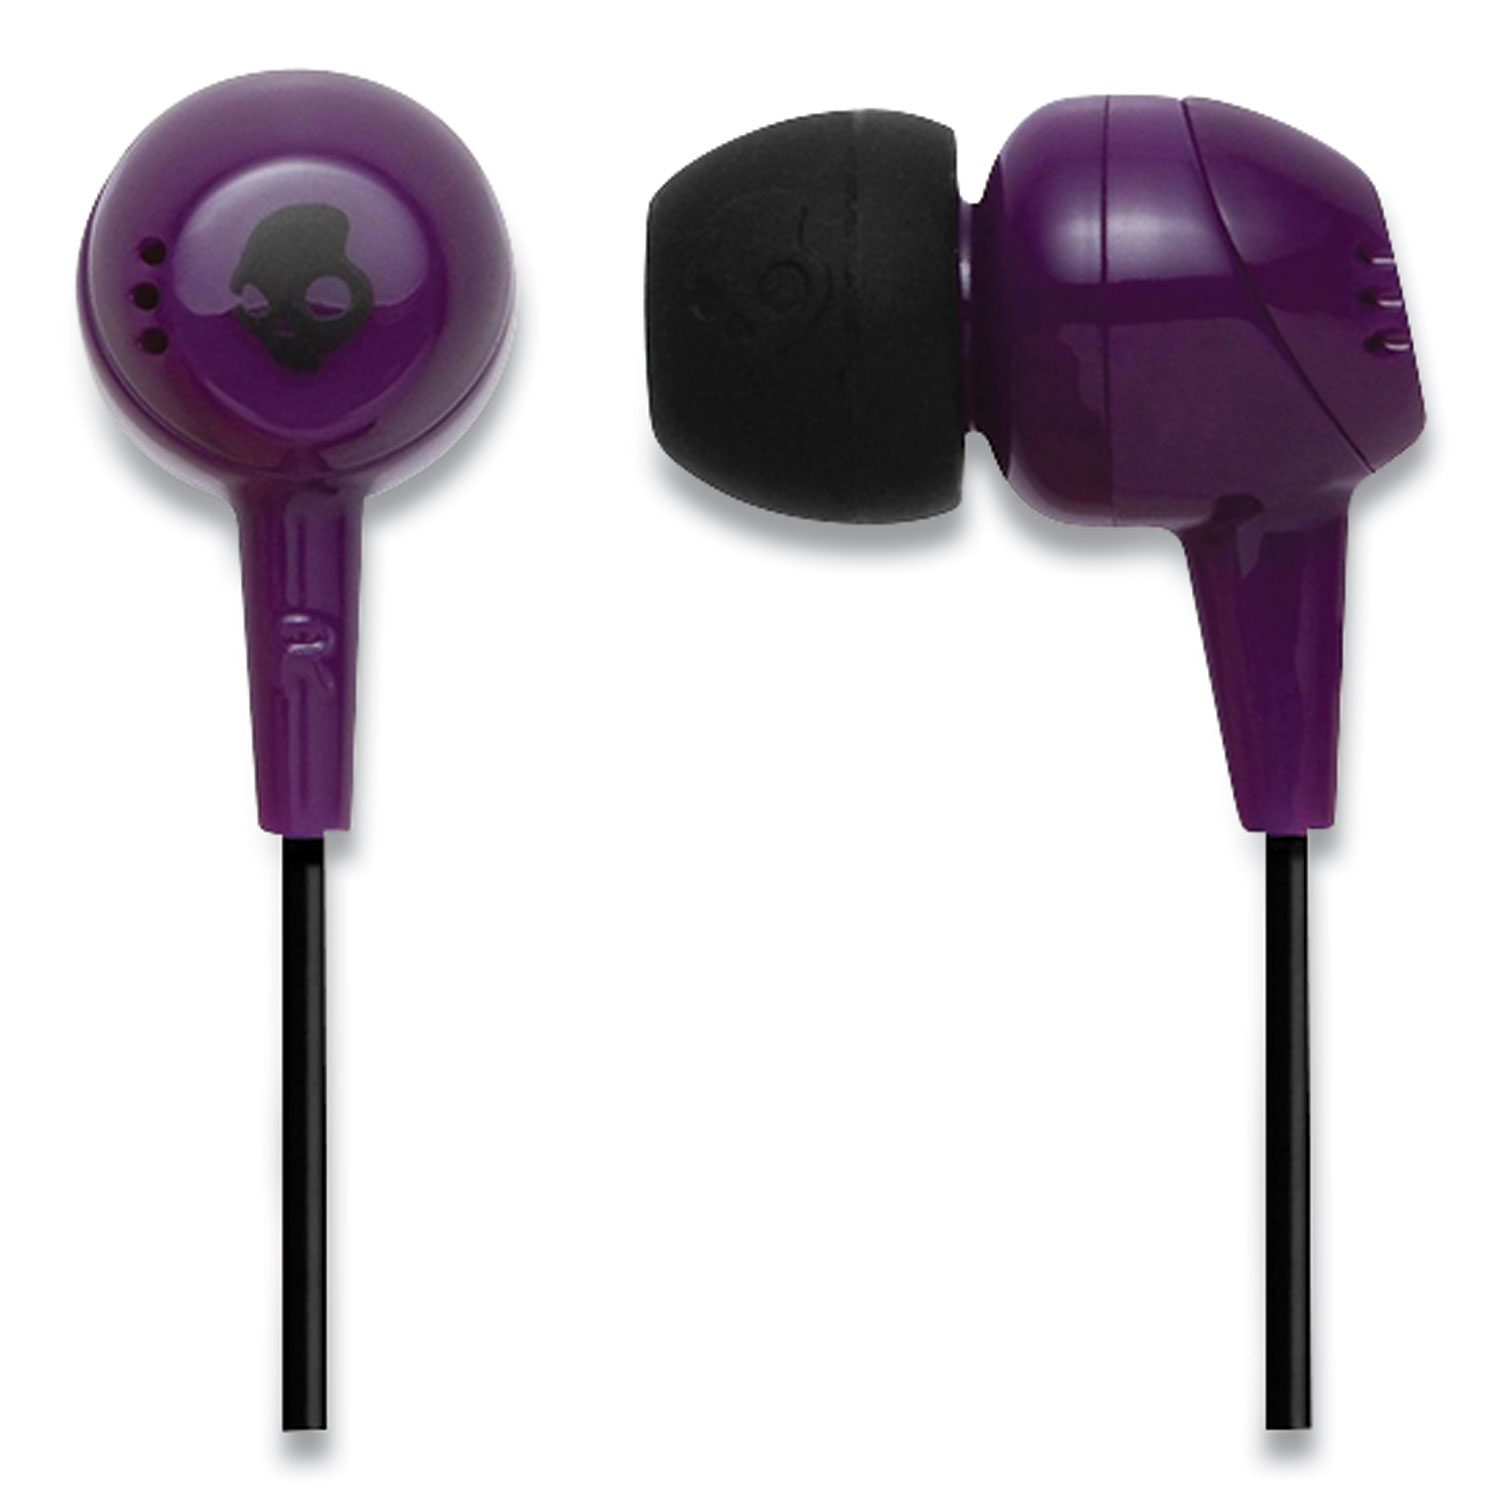  Skullcandy S2DUDZ-042 Jib In-Ear Headphones, Purple (SKA321115) 